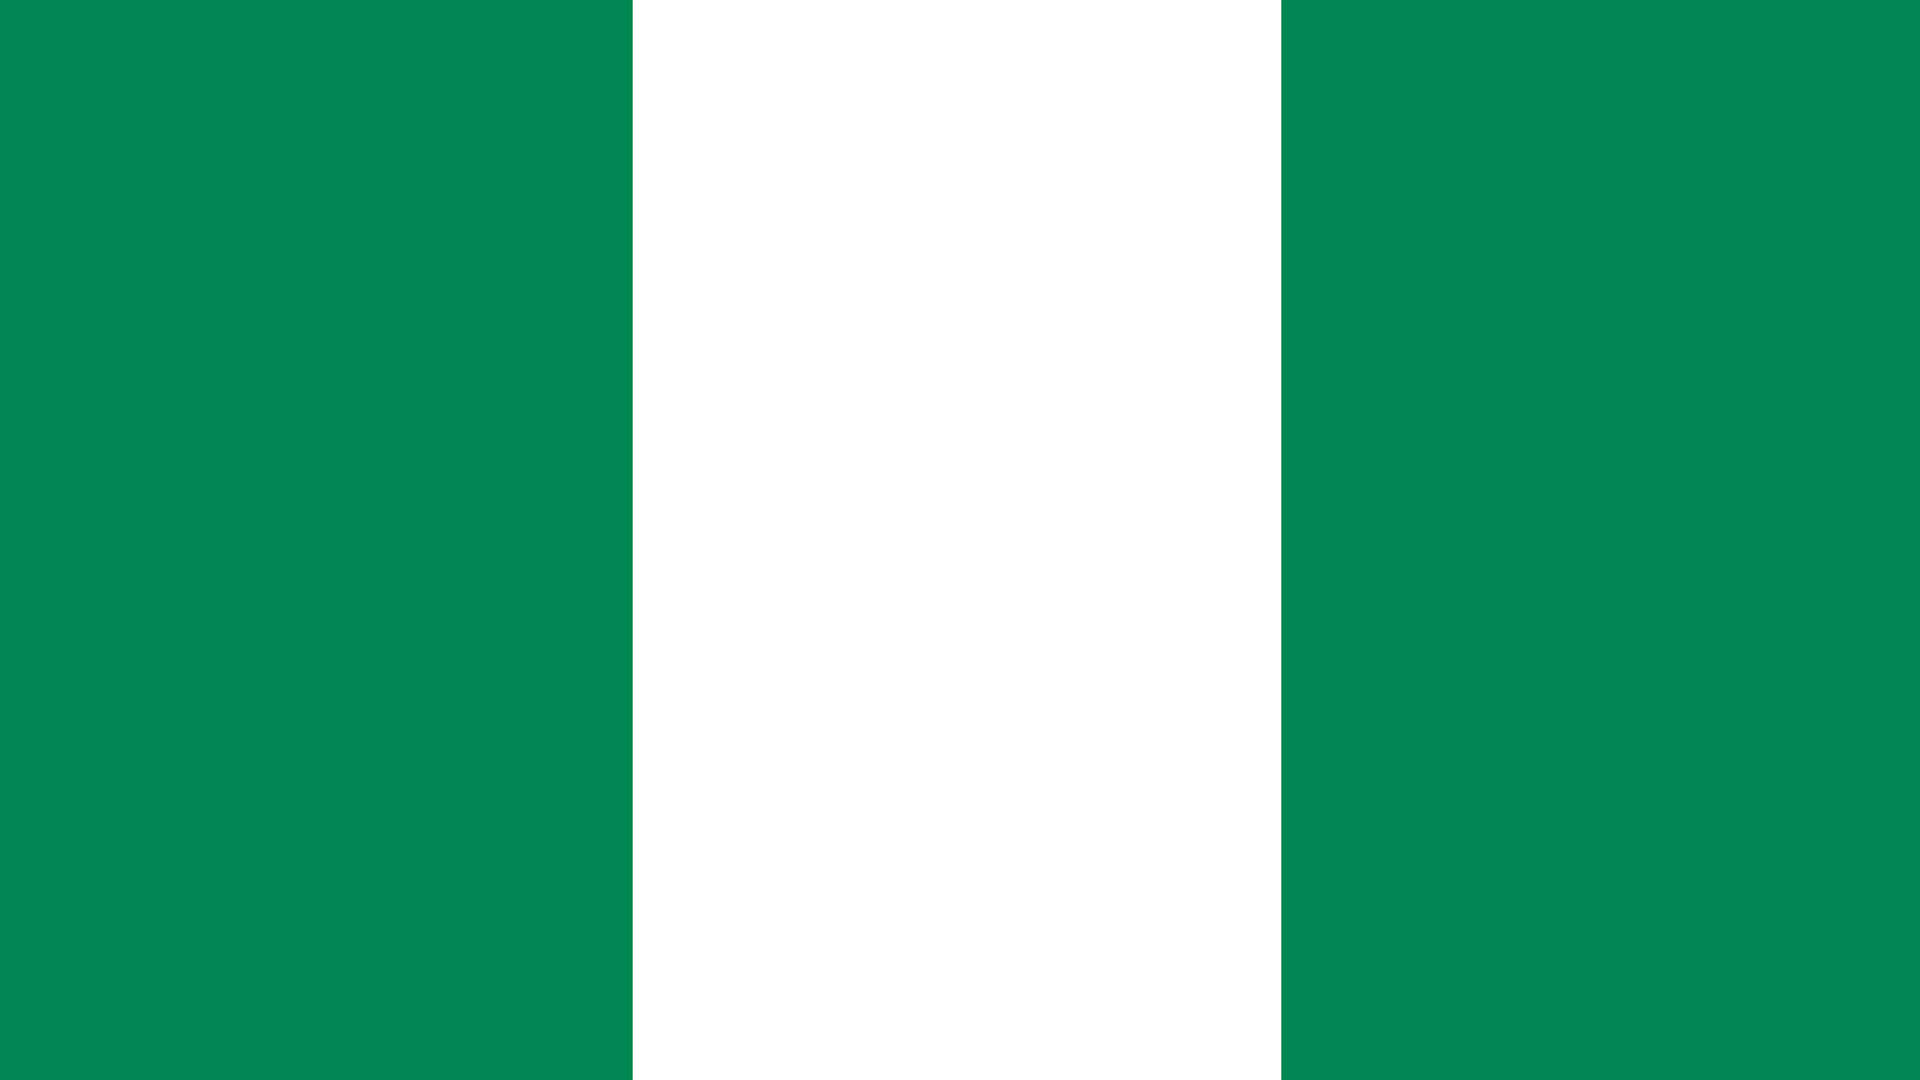 Nigeria Minimalist Digital Flag Illustration Wallpaper